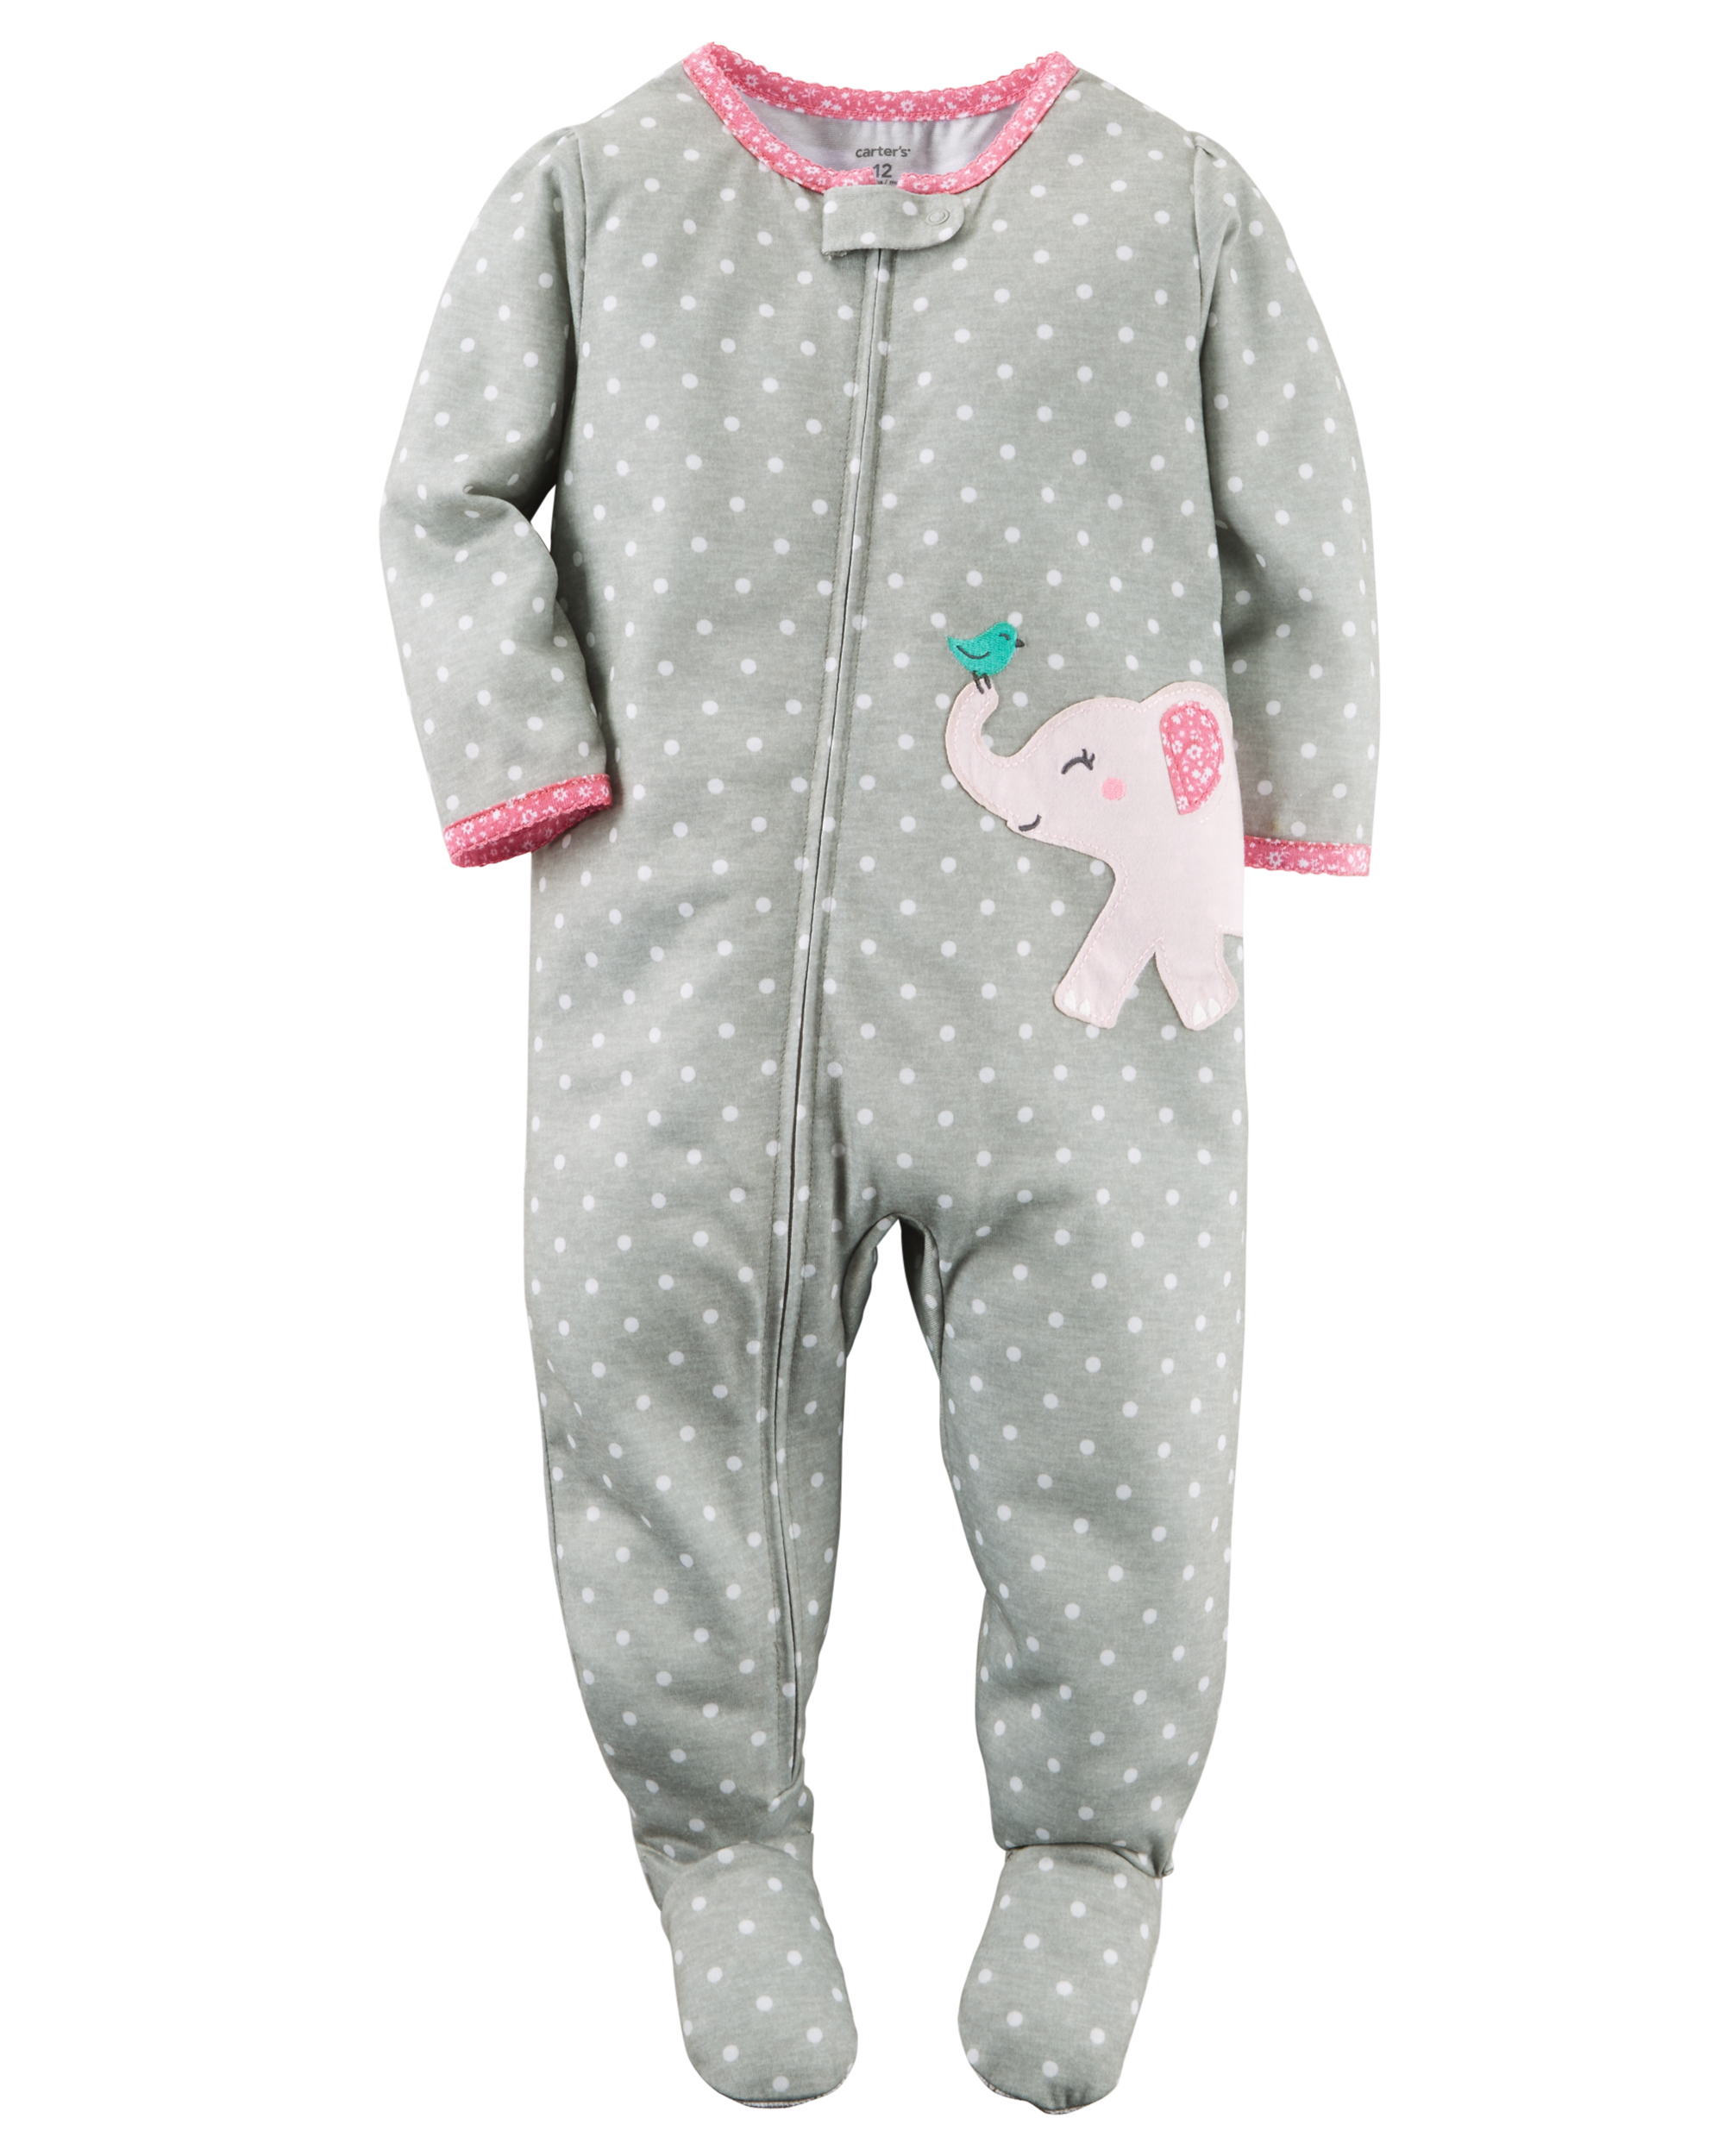 Carter's Infant & Toddler Girls' 1-Pc. Dotted Sleeper - Elephant